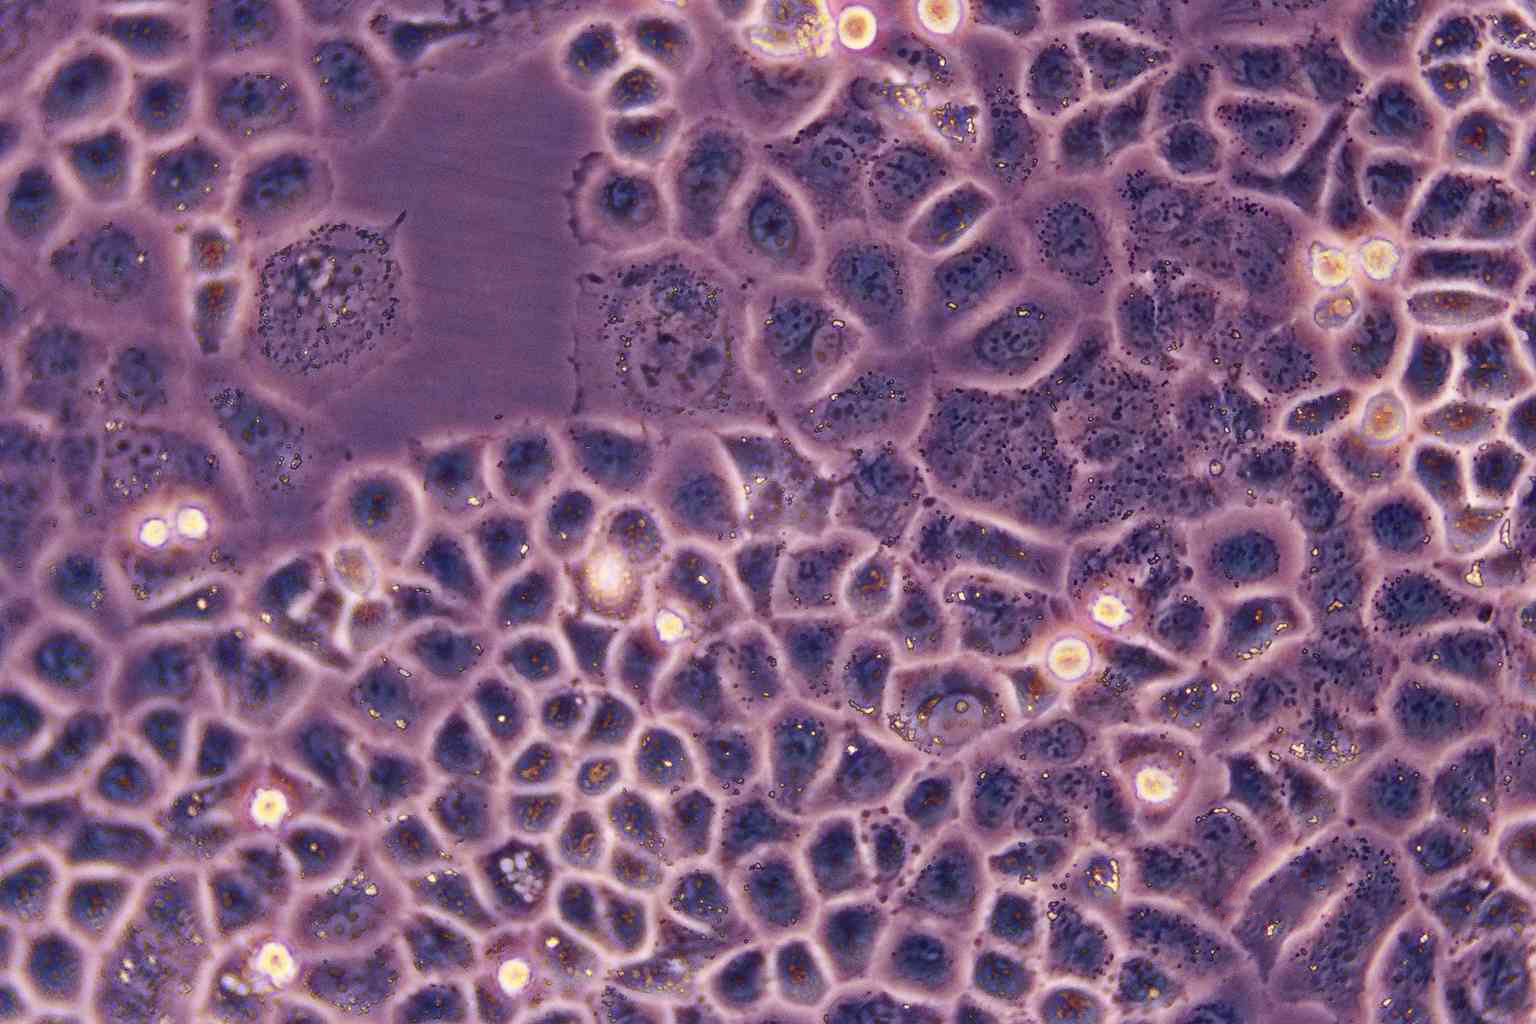 MDA-MB-157 Cells|人乳腺癌需消化细胞系,MDA-MB-157 Cells